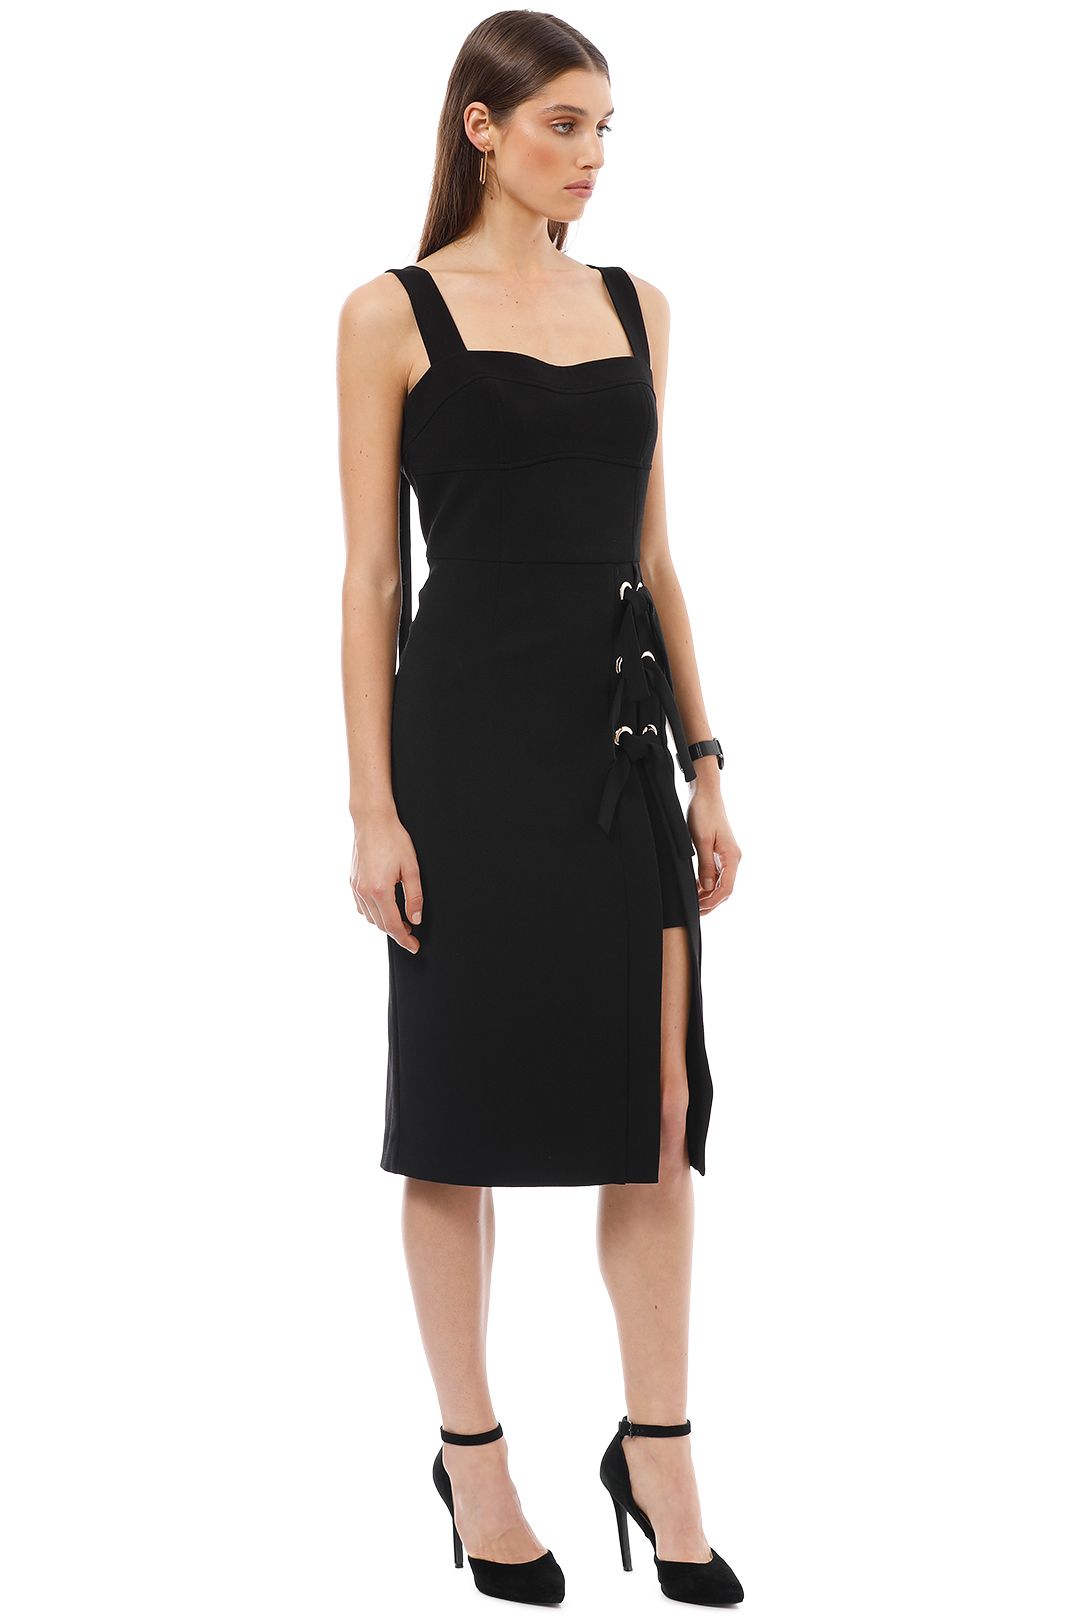 Rebecca Vallance - Celestina Tie Dress - Black - Side